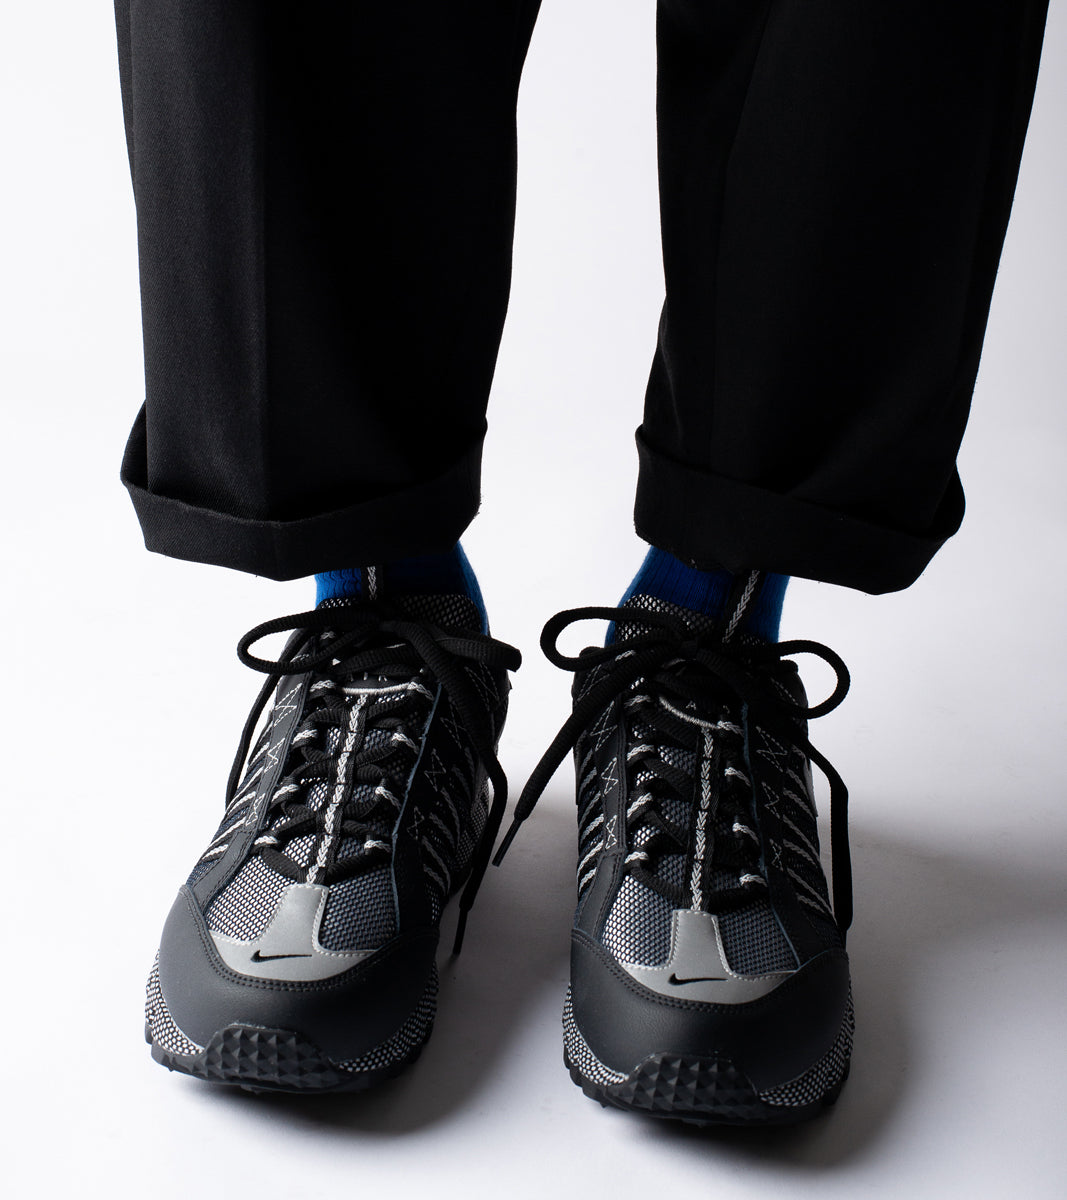 Essential casual socks - Aka Blue